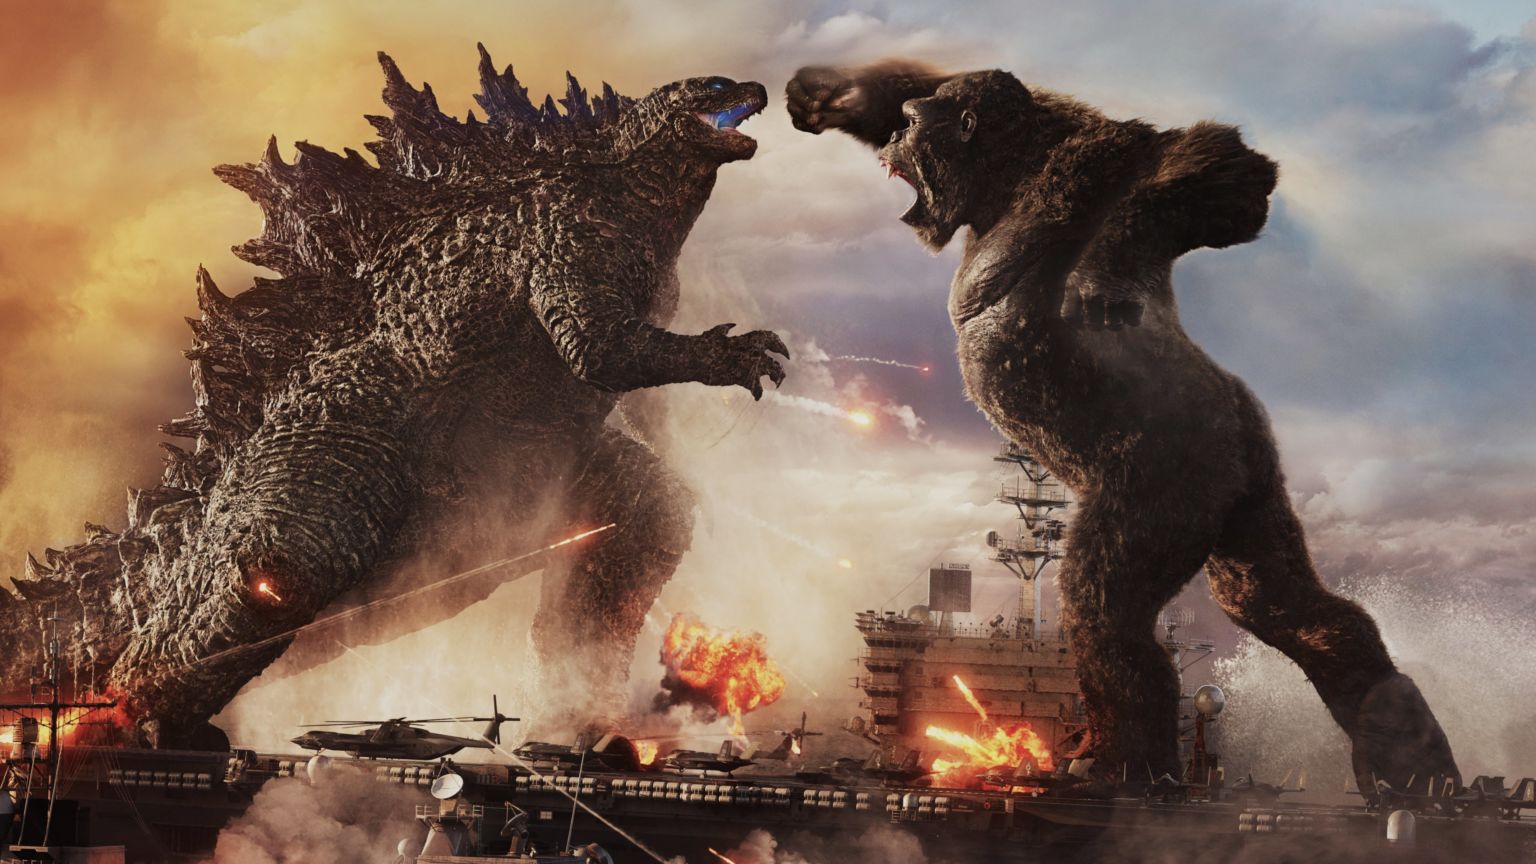 ⚡️💐 Godzilla Vs. Kong (2021) মুভি ডাউনলোড করে নিন ডুয়াল অডিও (হিন্দি ডাবিং) এবং আরো নিয়ে নিন এই সিরিজের অন্যান্য মুভির ডাউনলোড লিংক। [গুগল ড্রাইভ] 💐🔥